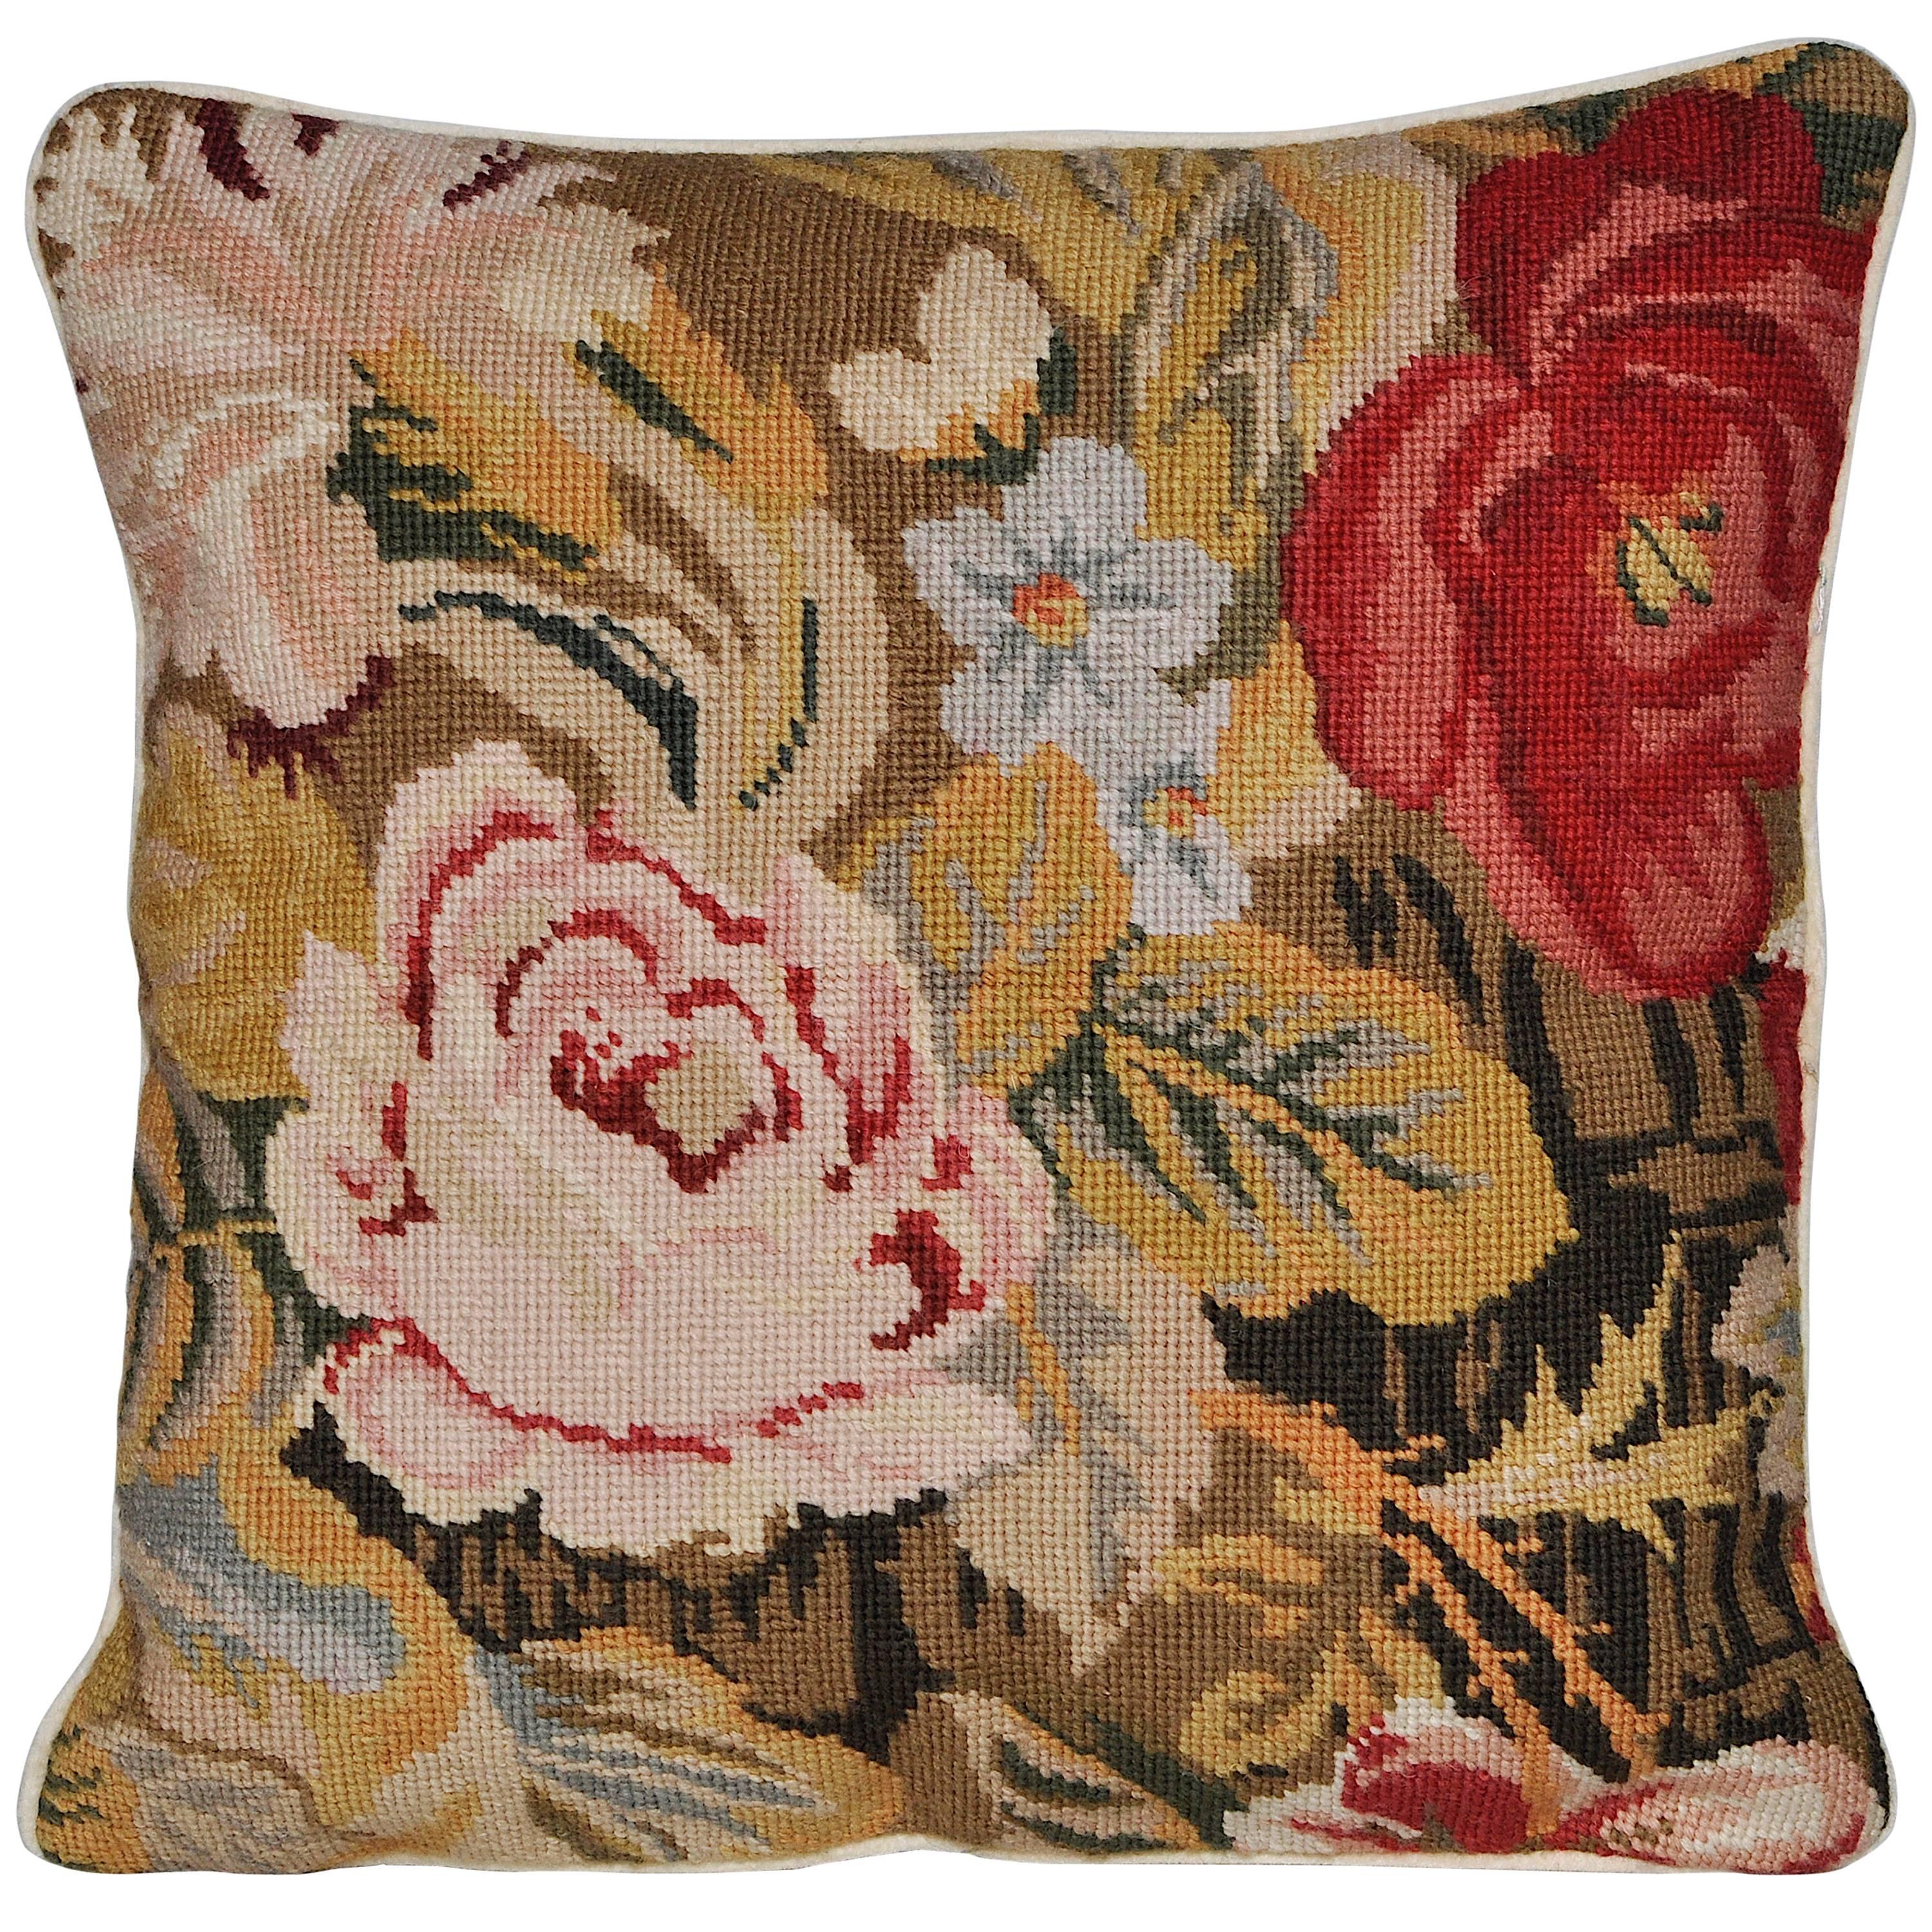 Antique Irish Hand-Stitched Needlepoint Cushion Pillow